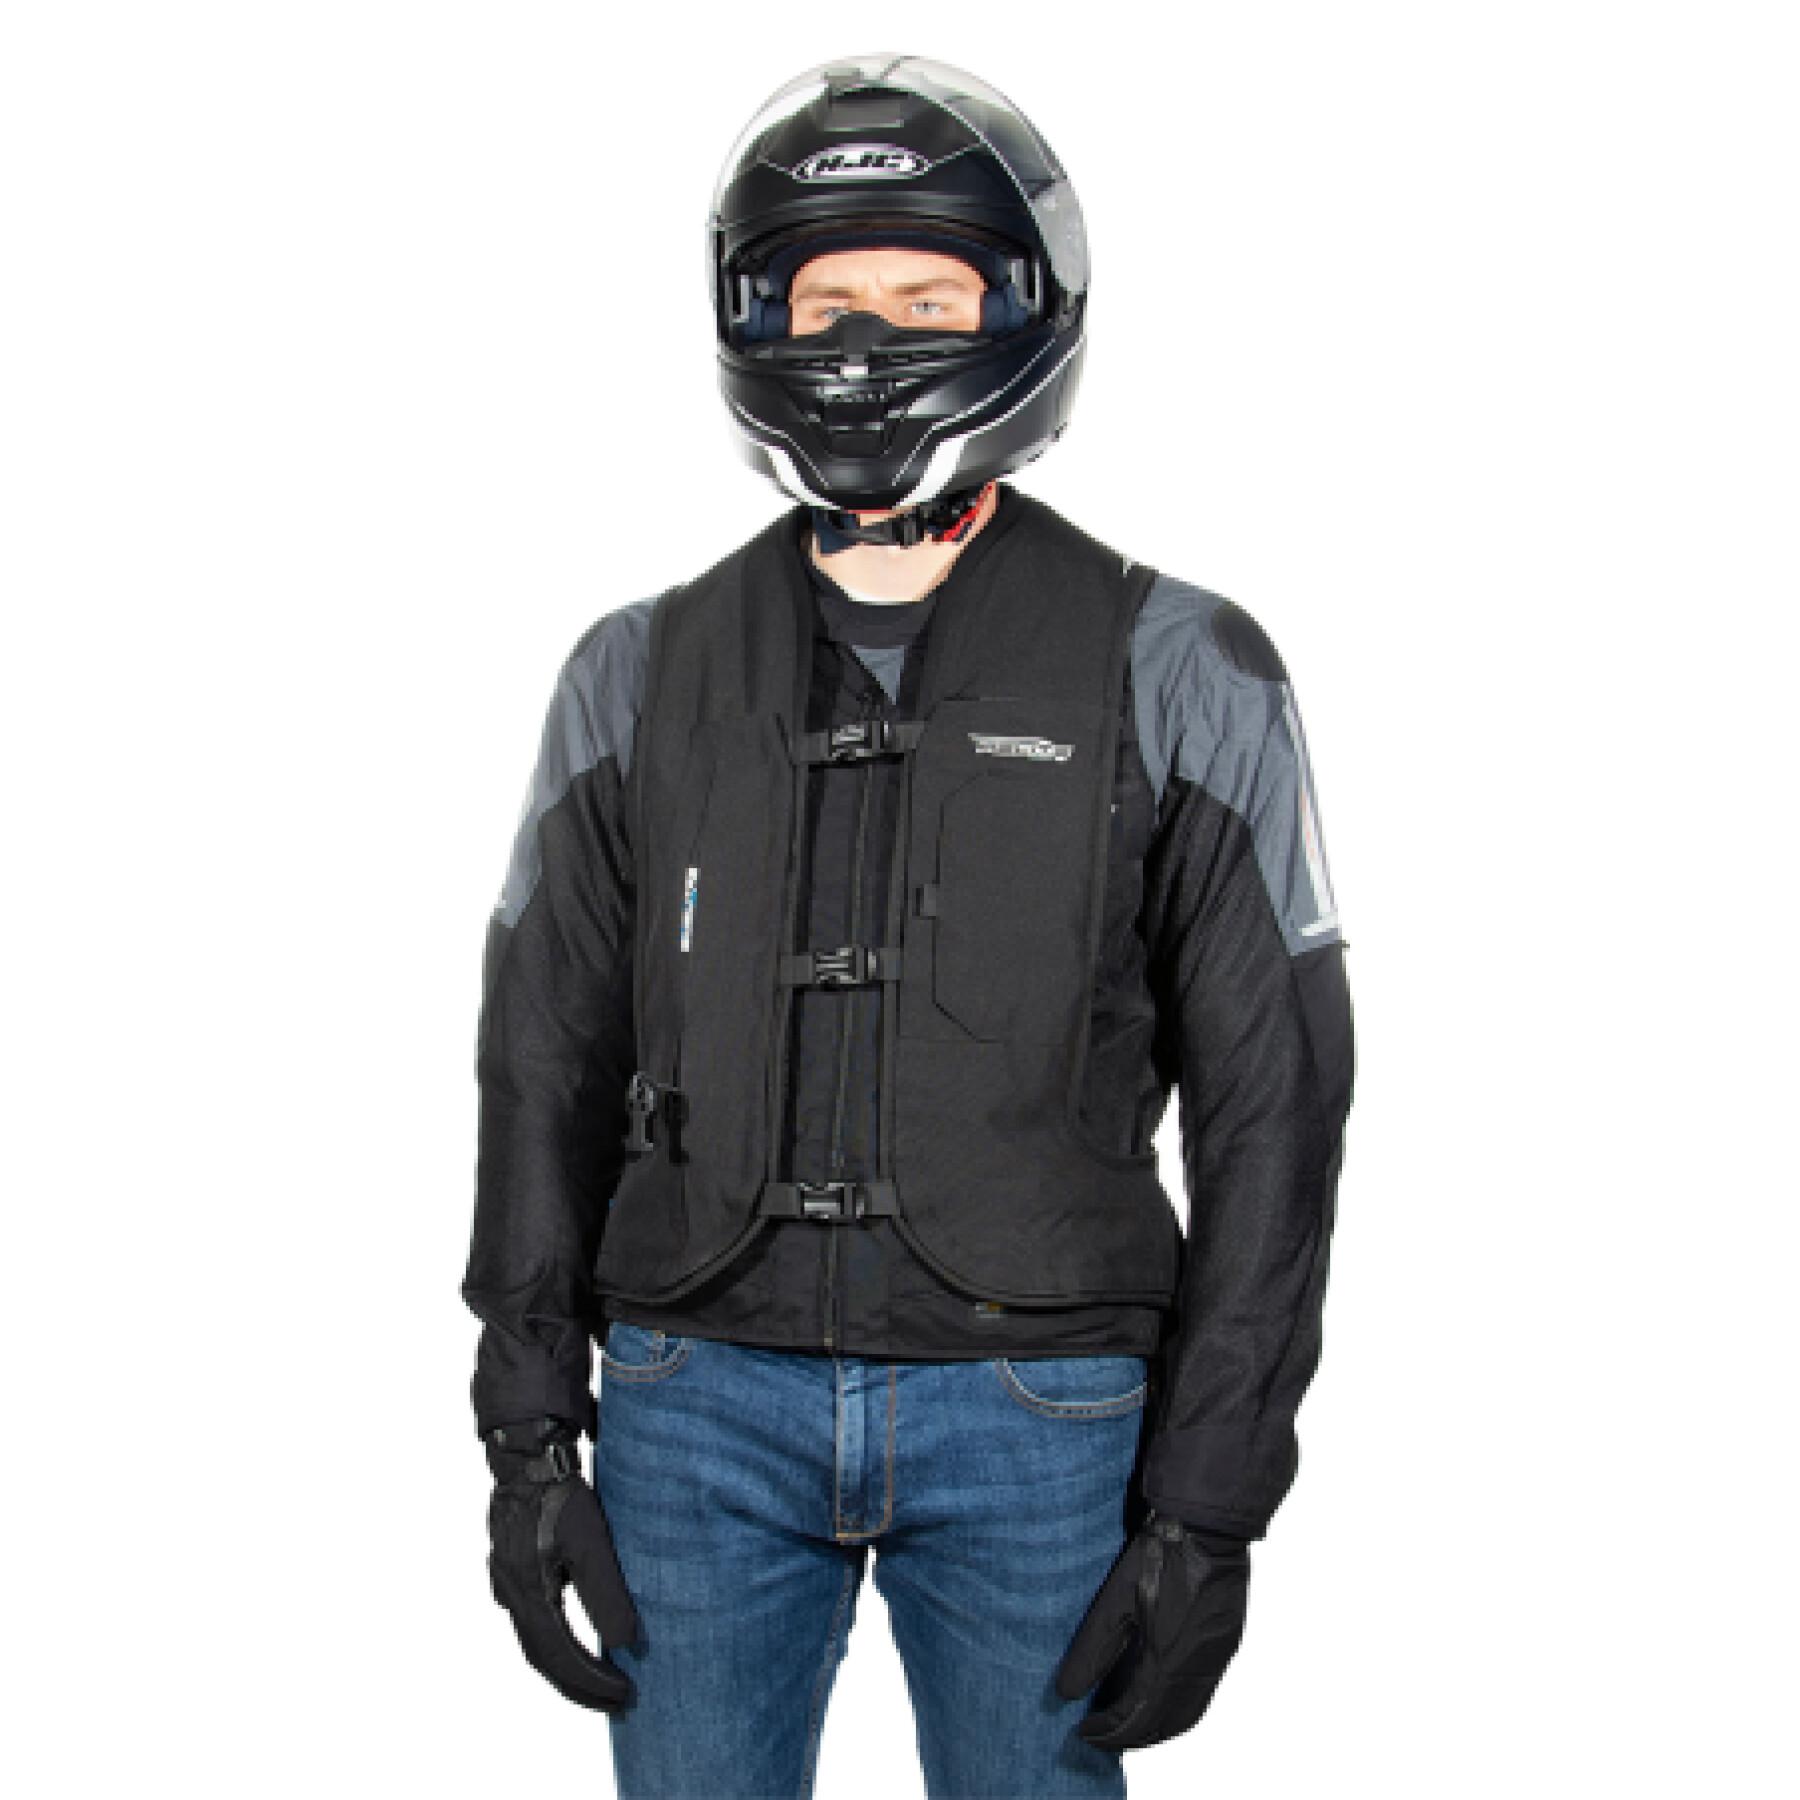 Colete de airbag electrónico para motociclos Helite e-turtle 2